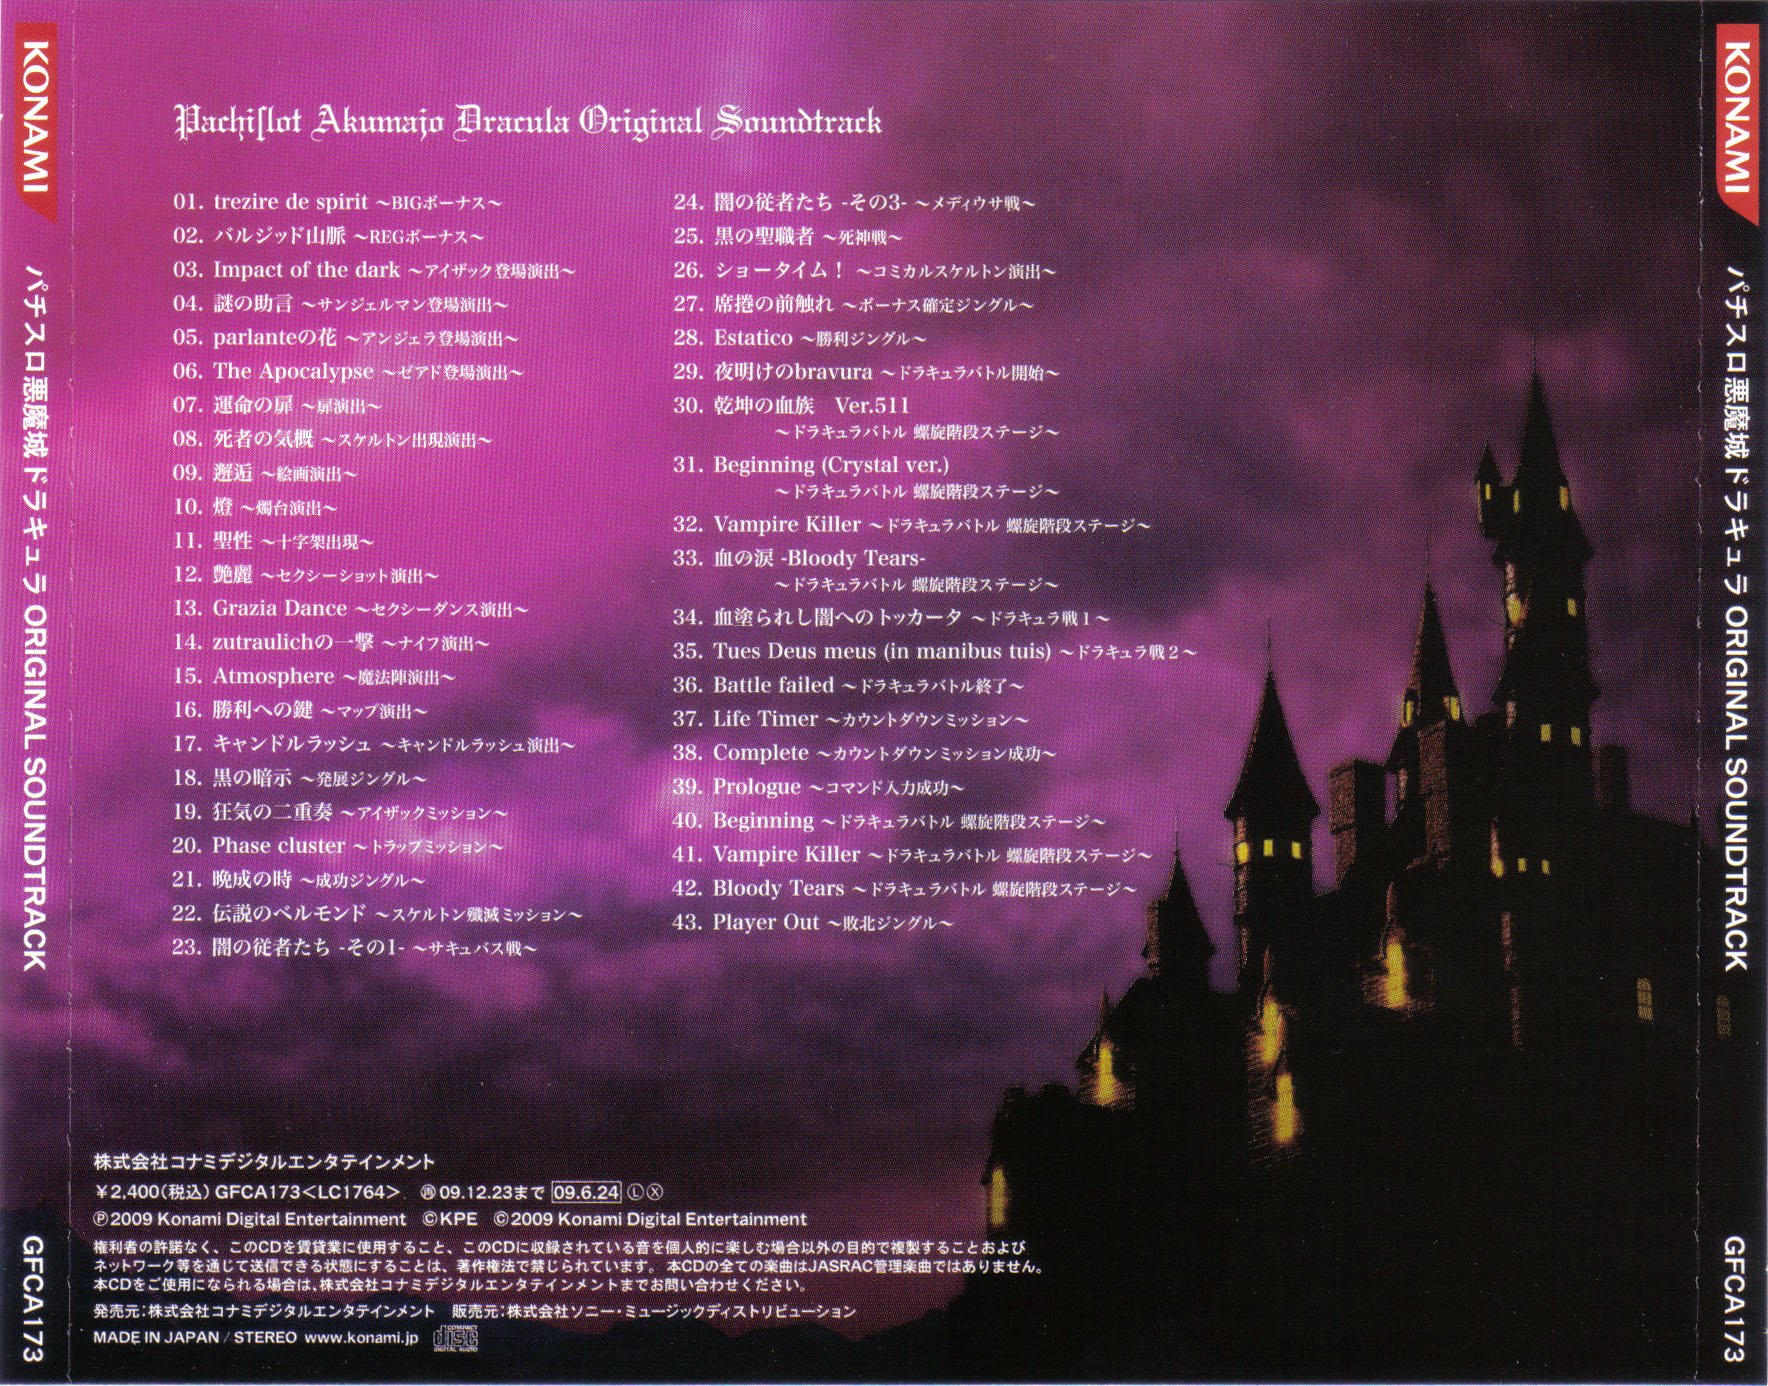 Pachislot Akumajō Dracula Original Soundtrack | Castlevania Wiki 